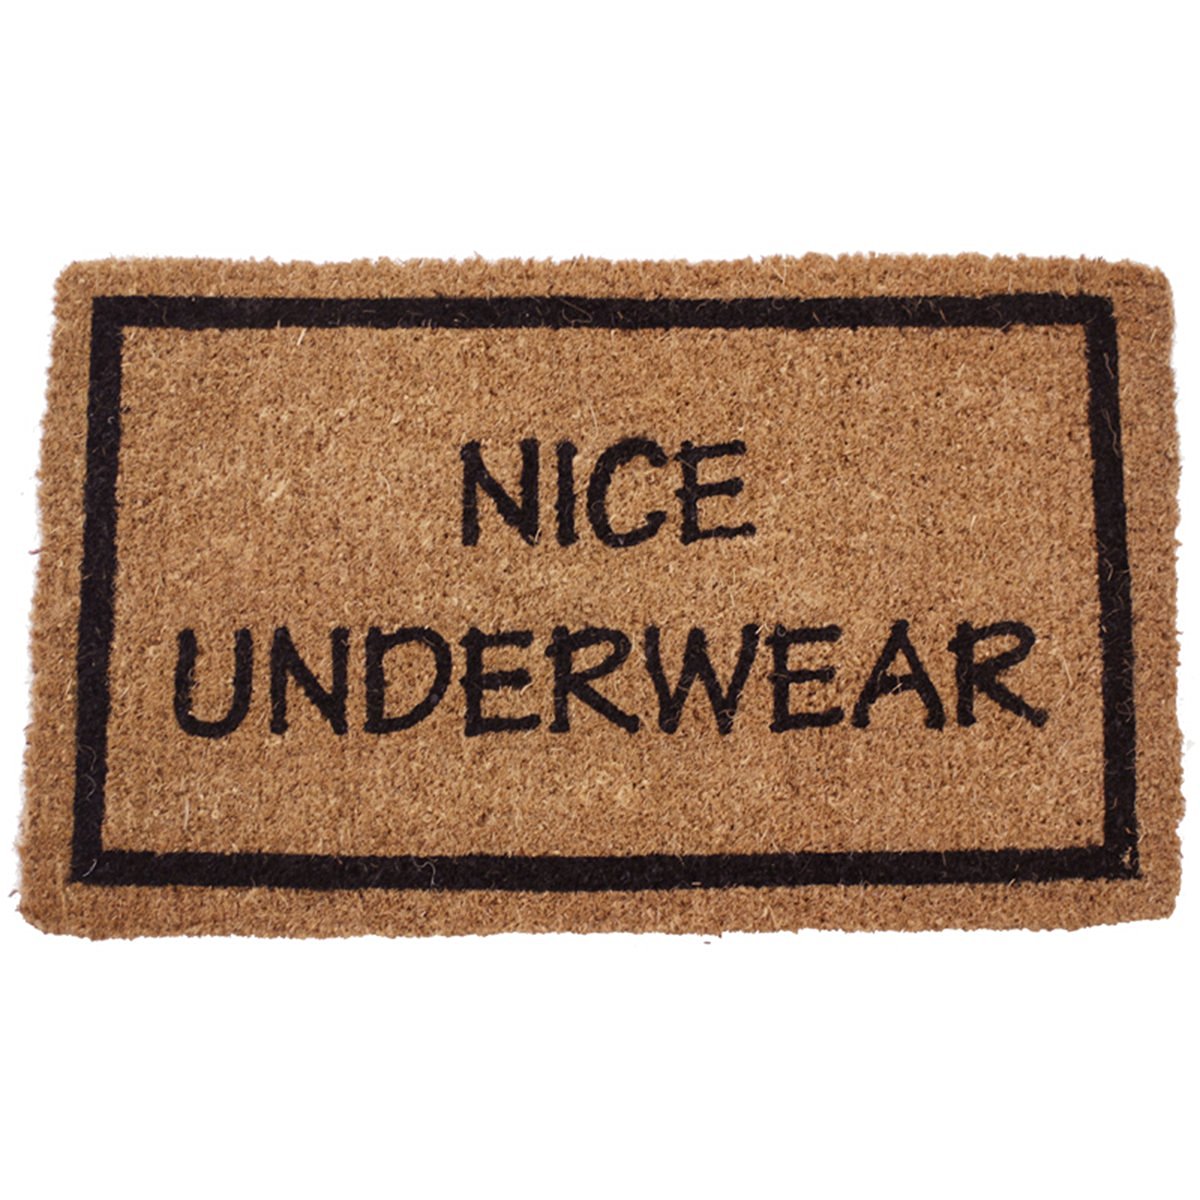 nice underwear doormat